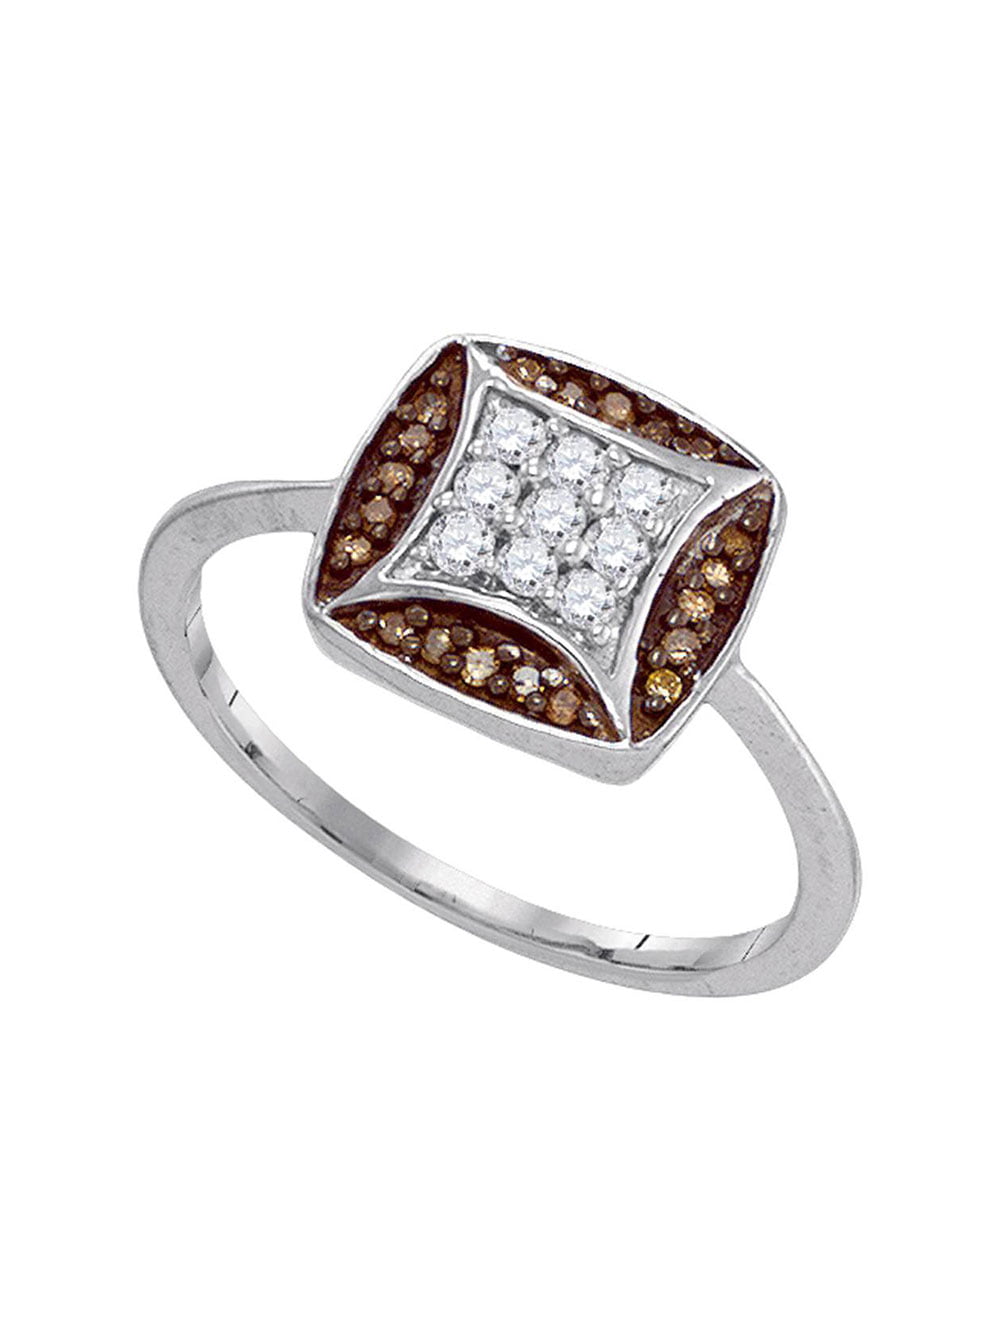 Details about   10Kt Rose Gold 0.25 Ct Genuine Natural Diamond Flower Design Ring